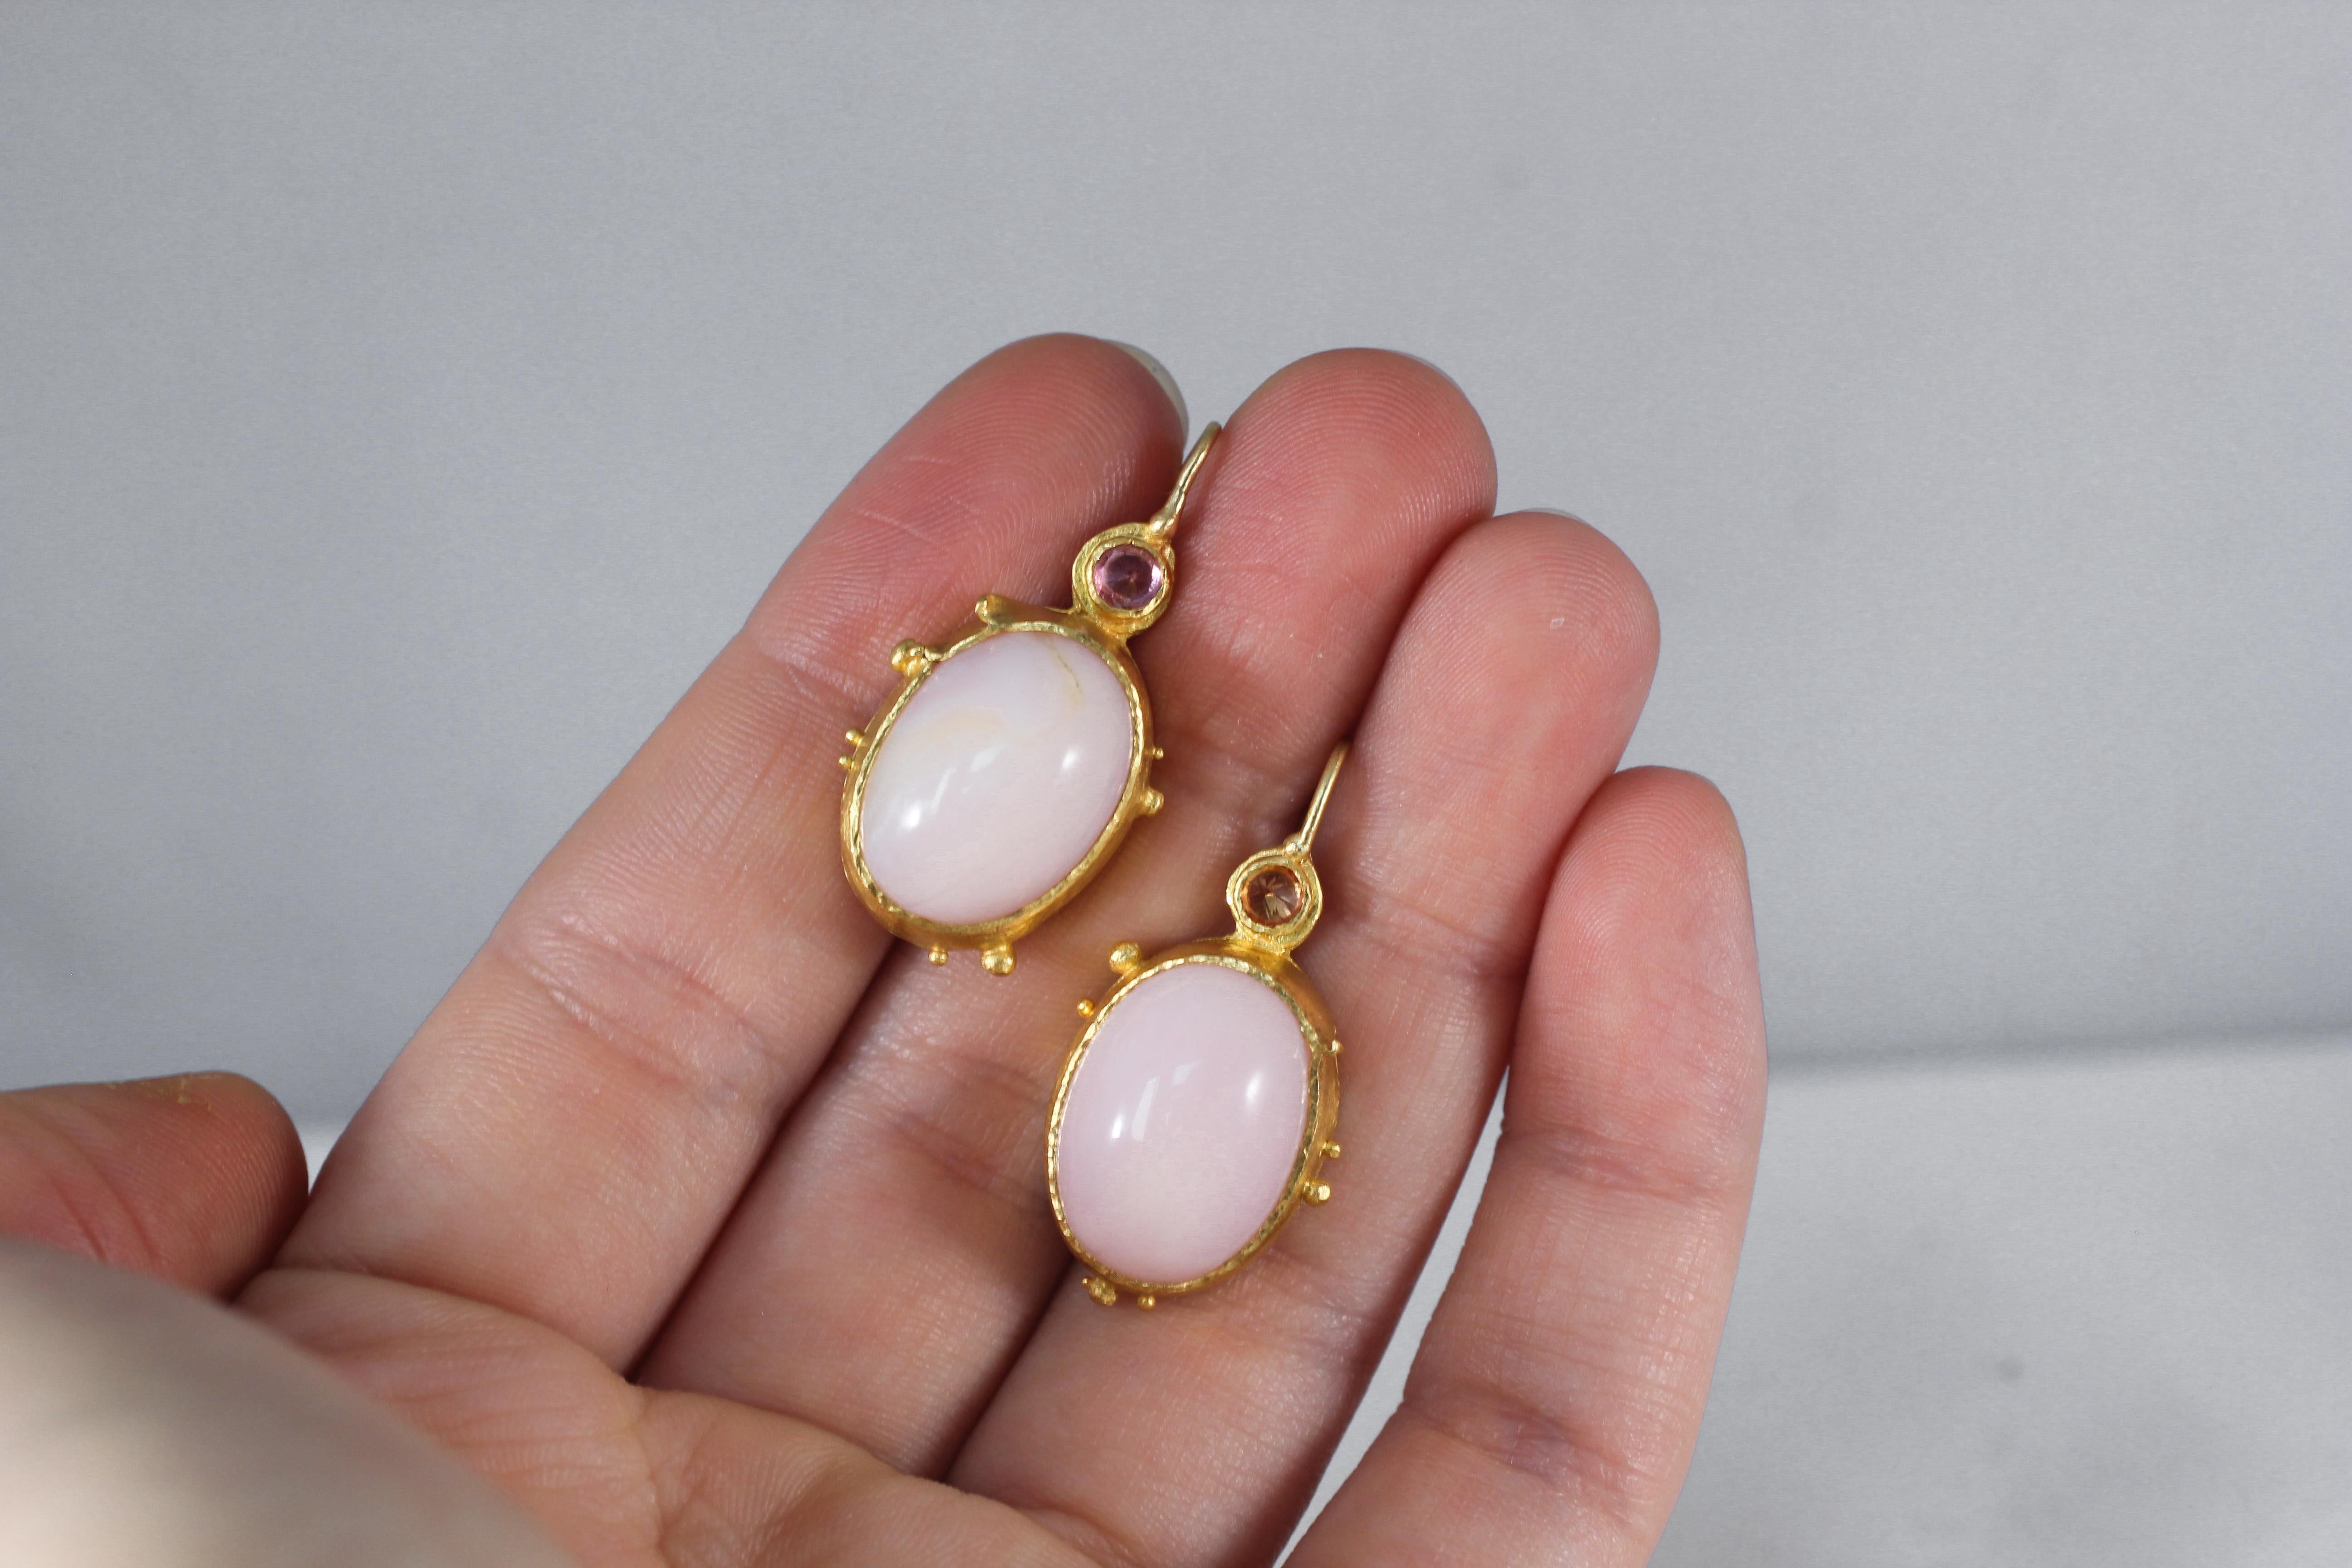 Opal Pink Sapphire 22 Karat Gold One-of-a-Kind Dangle Drop Earrings For Sale 7